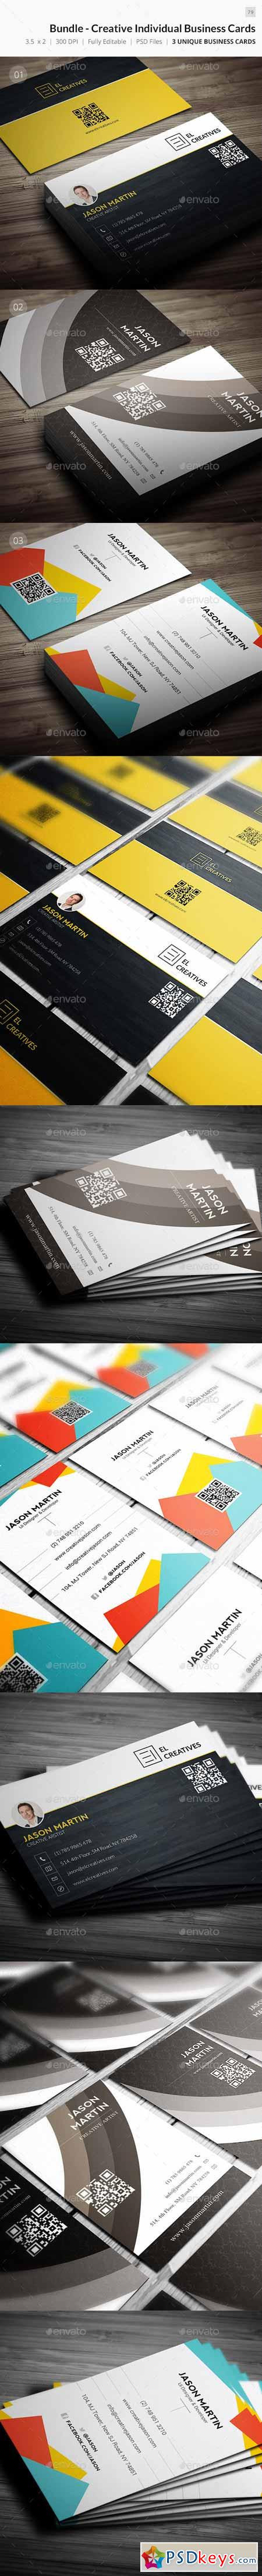 Bundle - Creative Individual Business Cards - 79 10525129